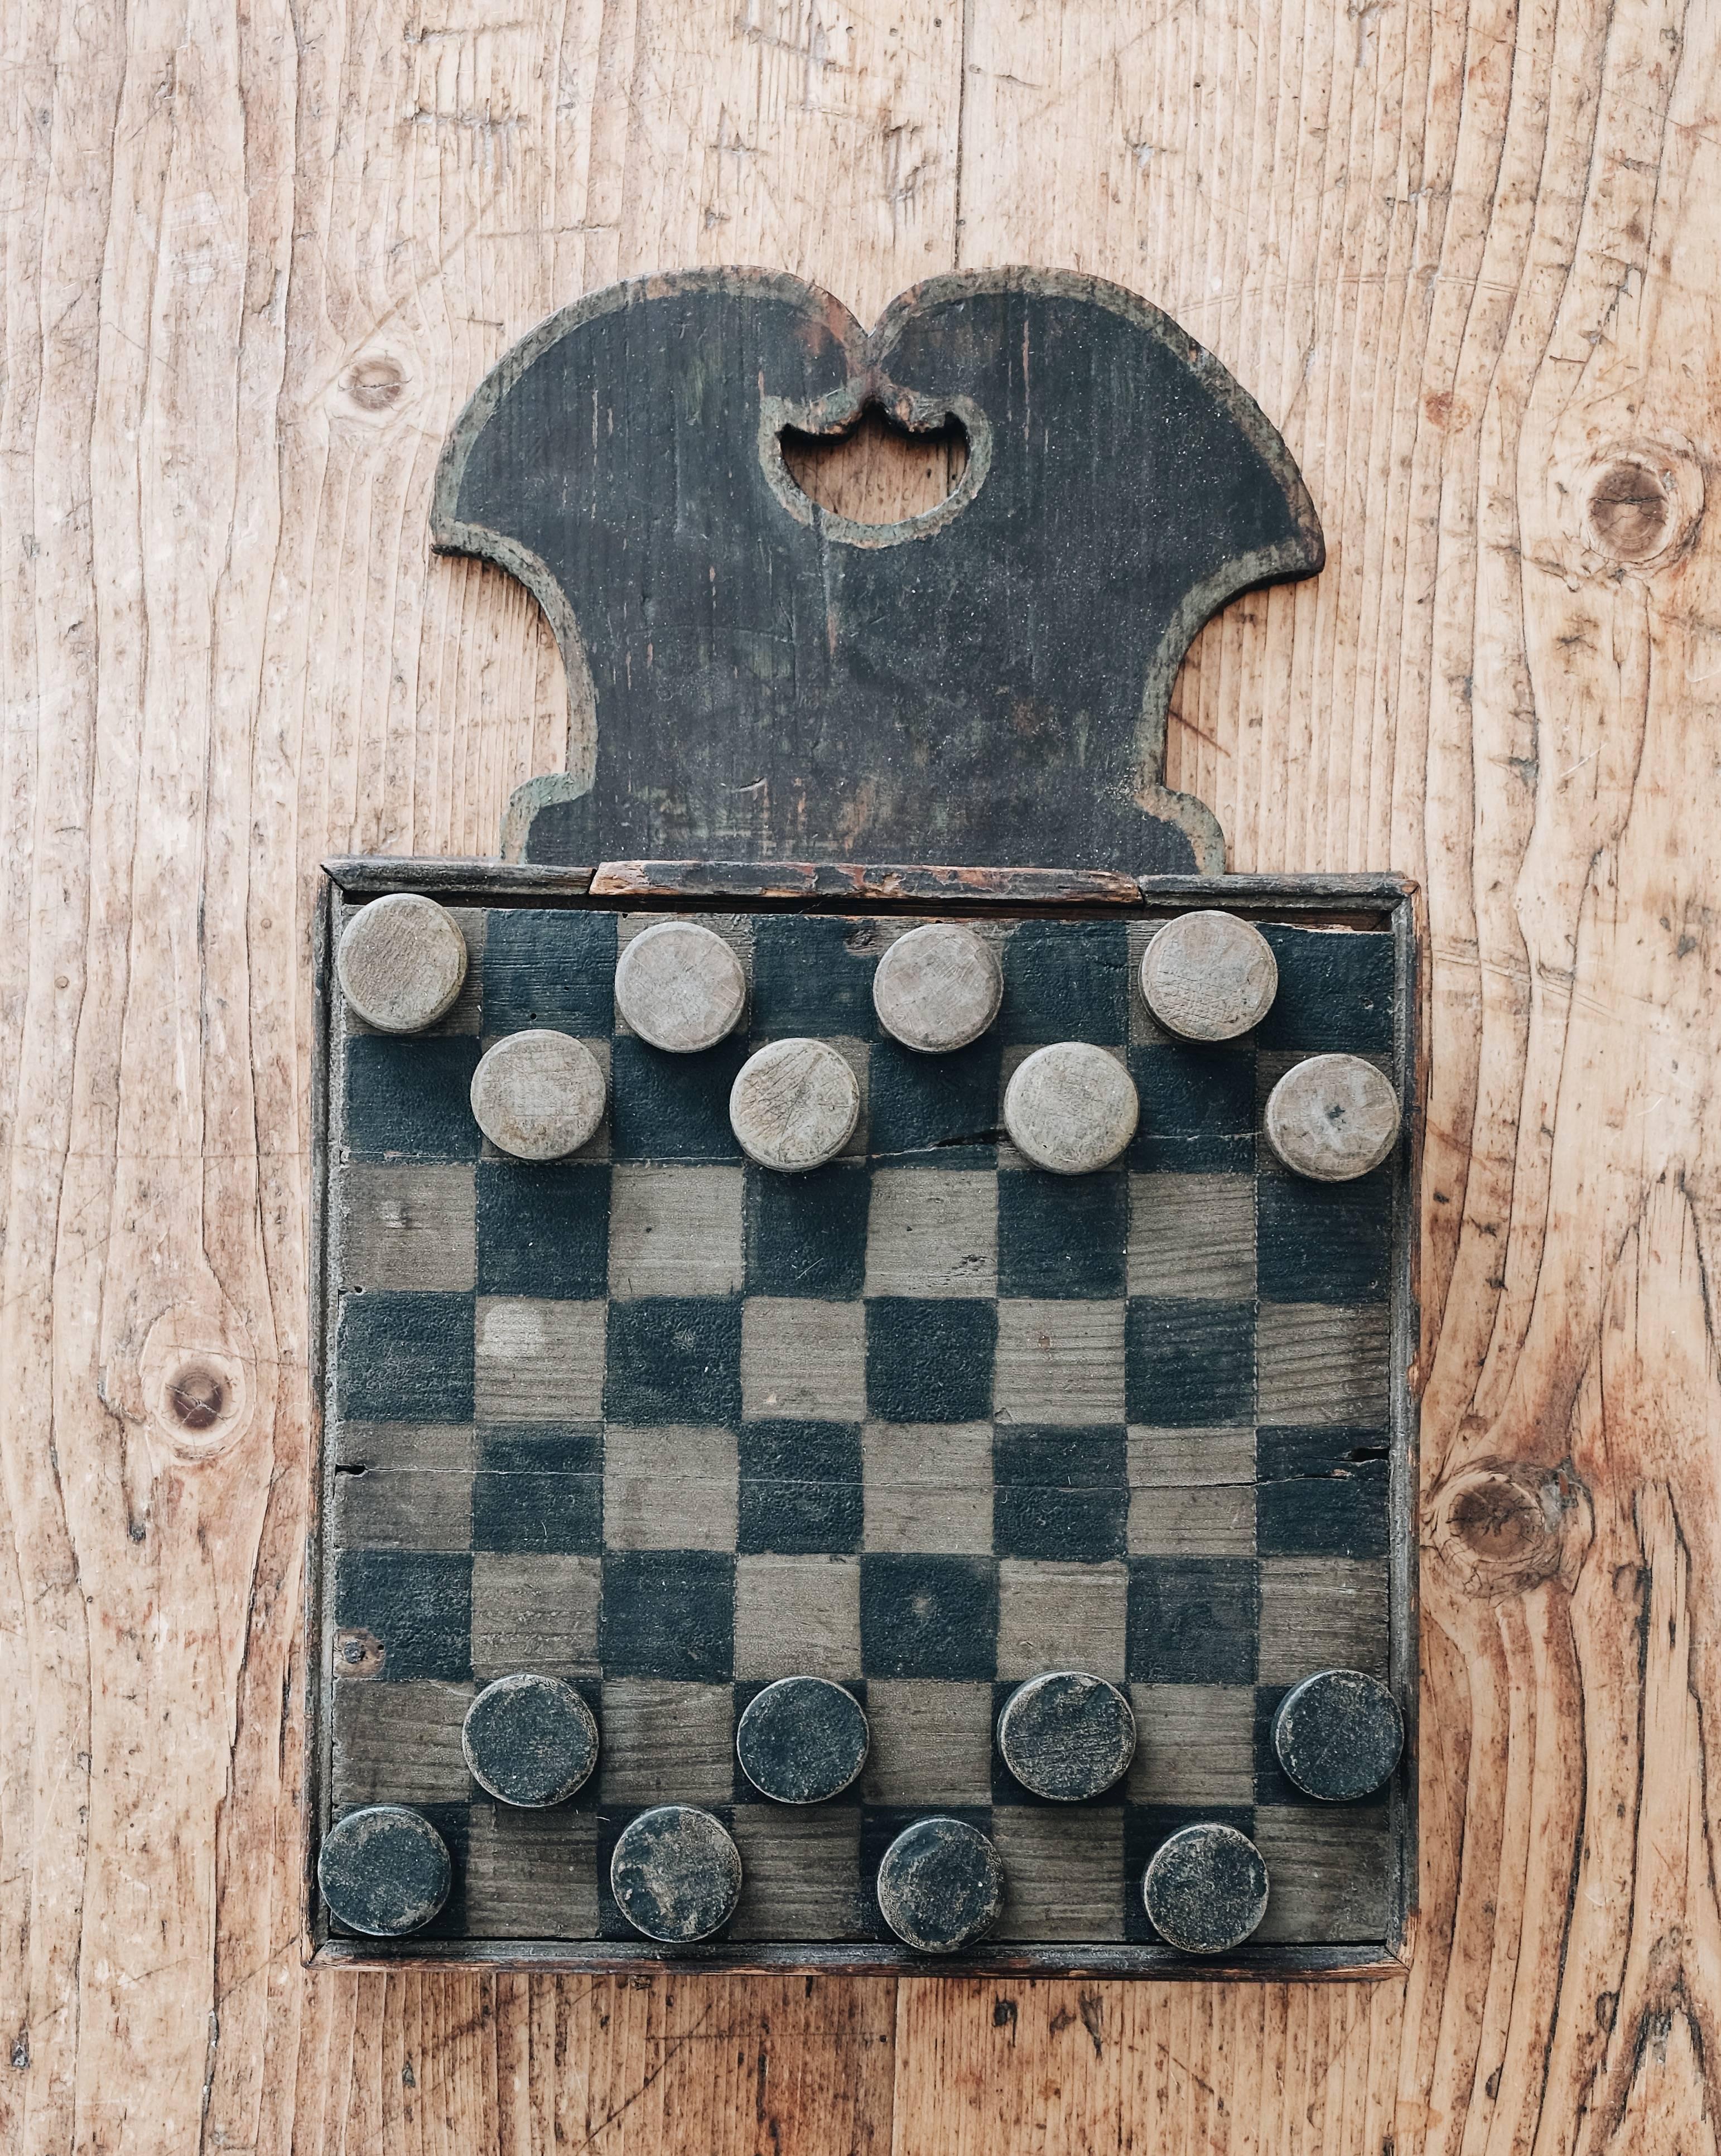 An unusual Swedish 19th century Folk Art checkers game in original condition, circa 1800, Sweden.